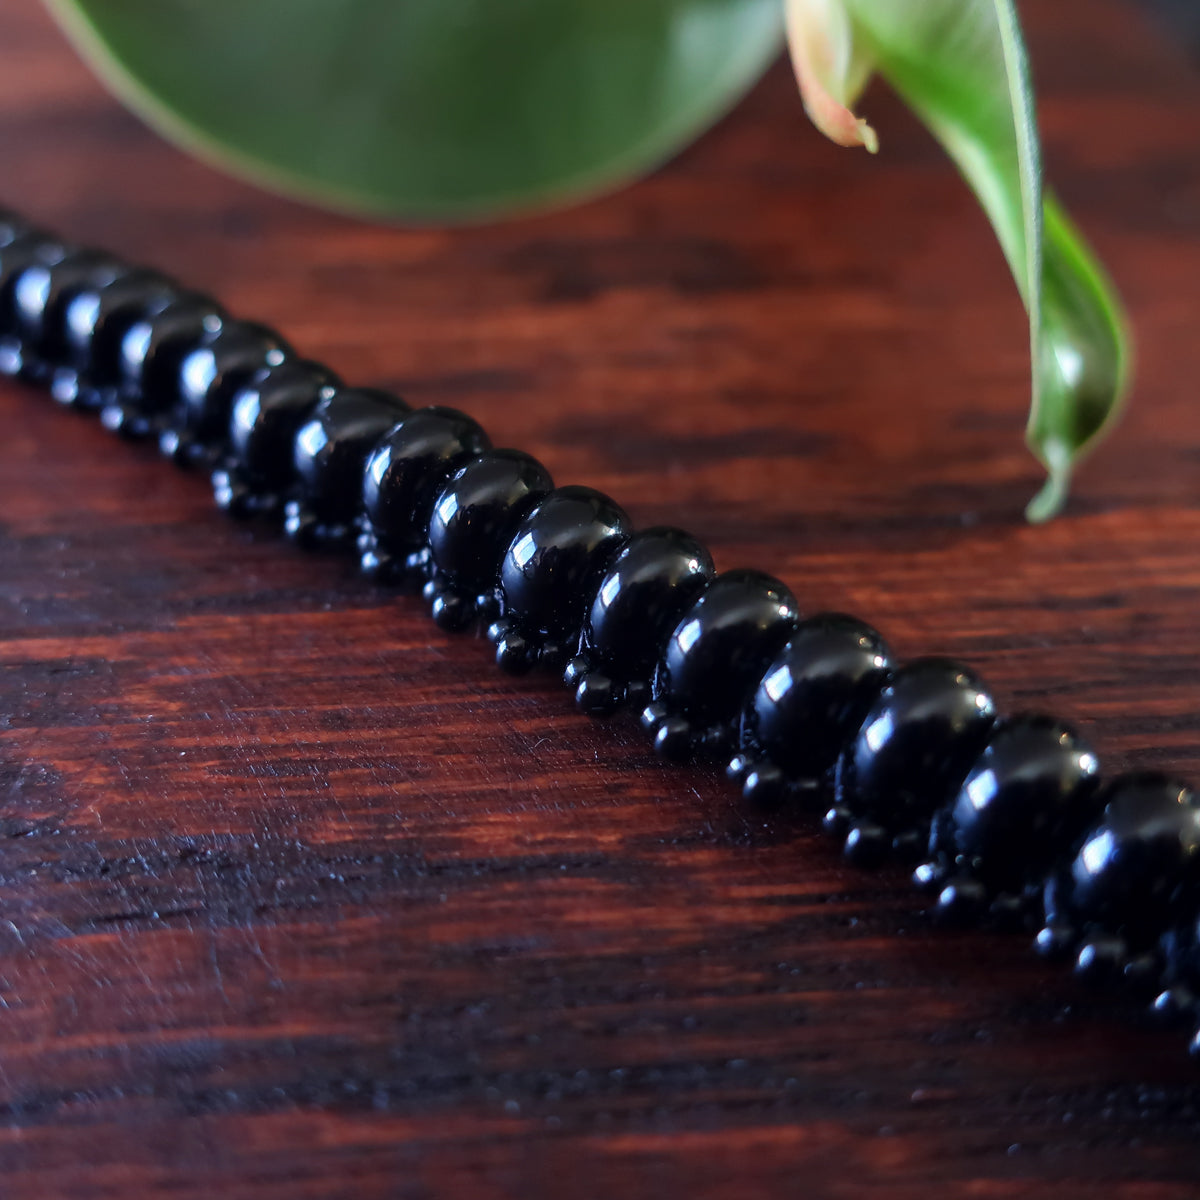 Temple Tree Bohemian Glass Bead Caterpillar Weave Bracelet - Black